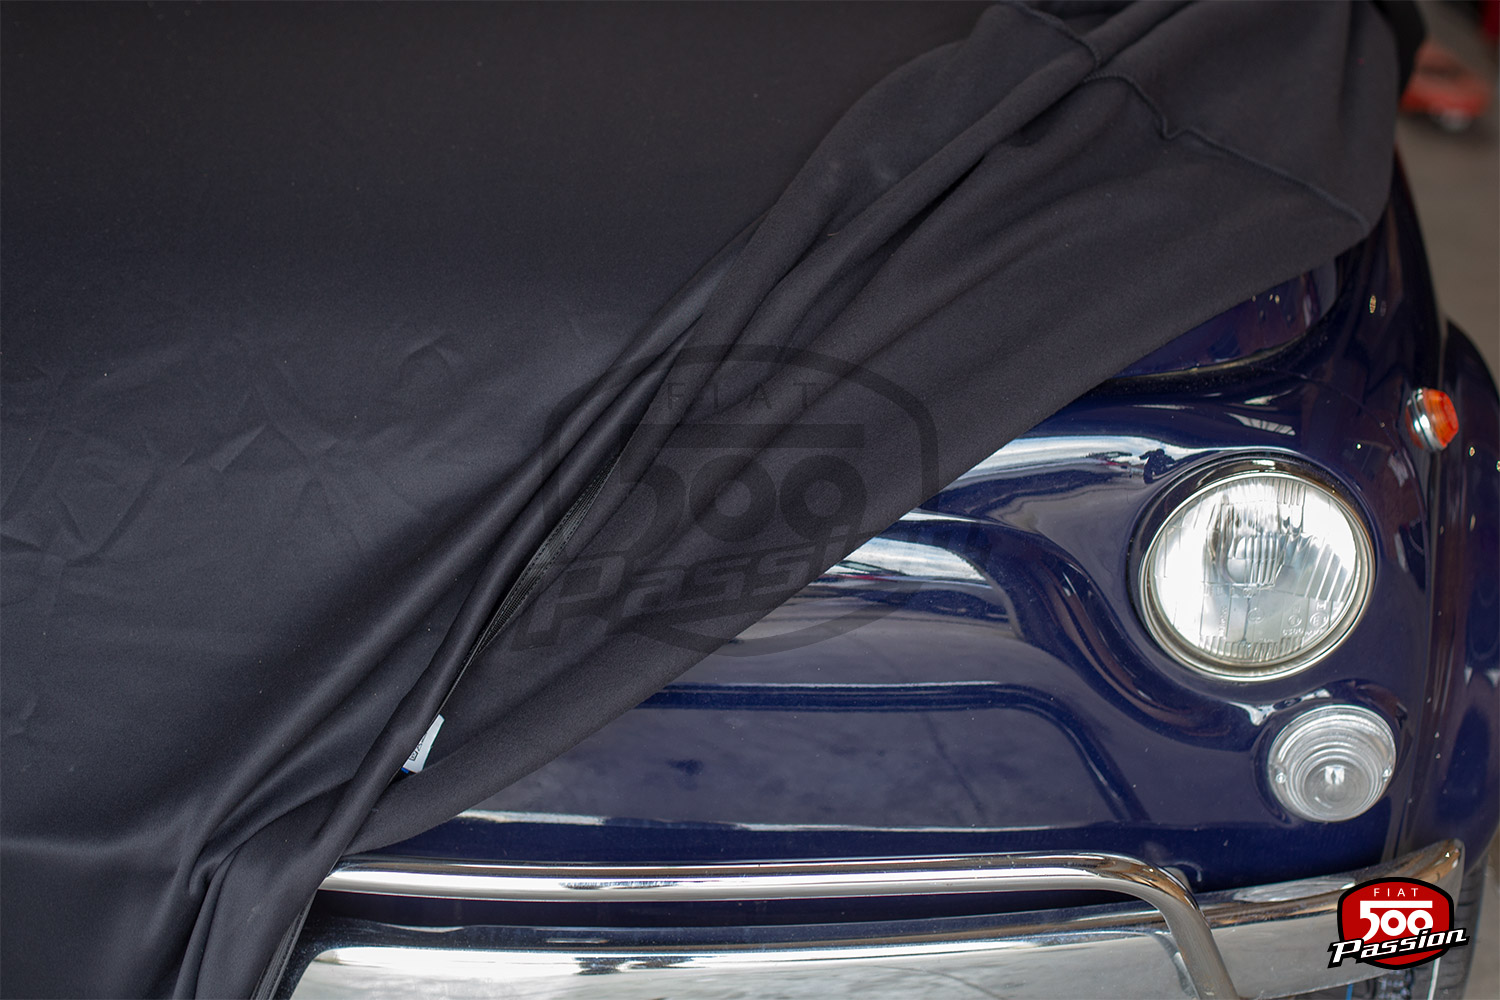 Bâche protection sur-mesure Fiat 500 Nuova - Housse Jersey Coverlux+© :  usage garage